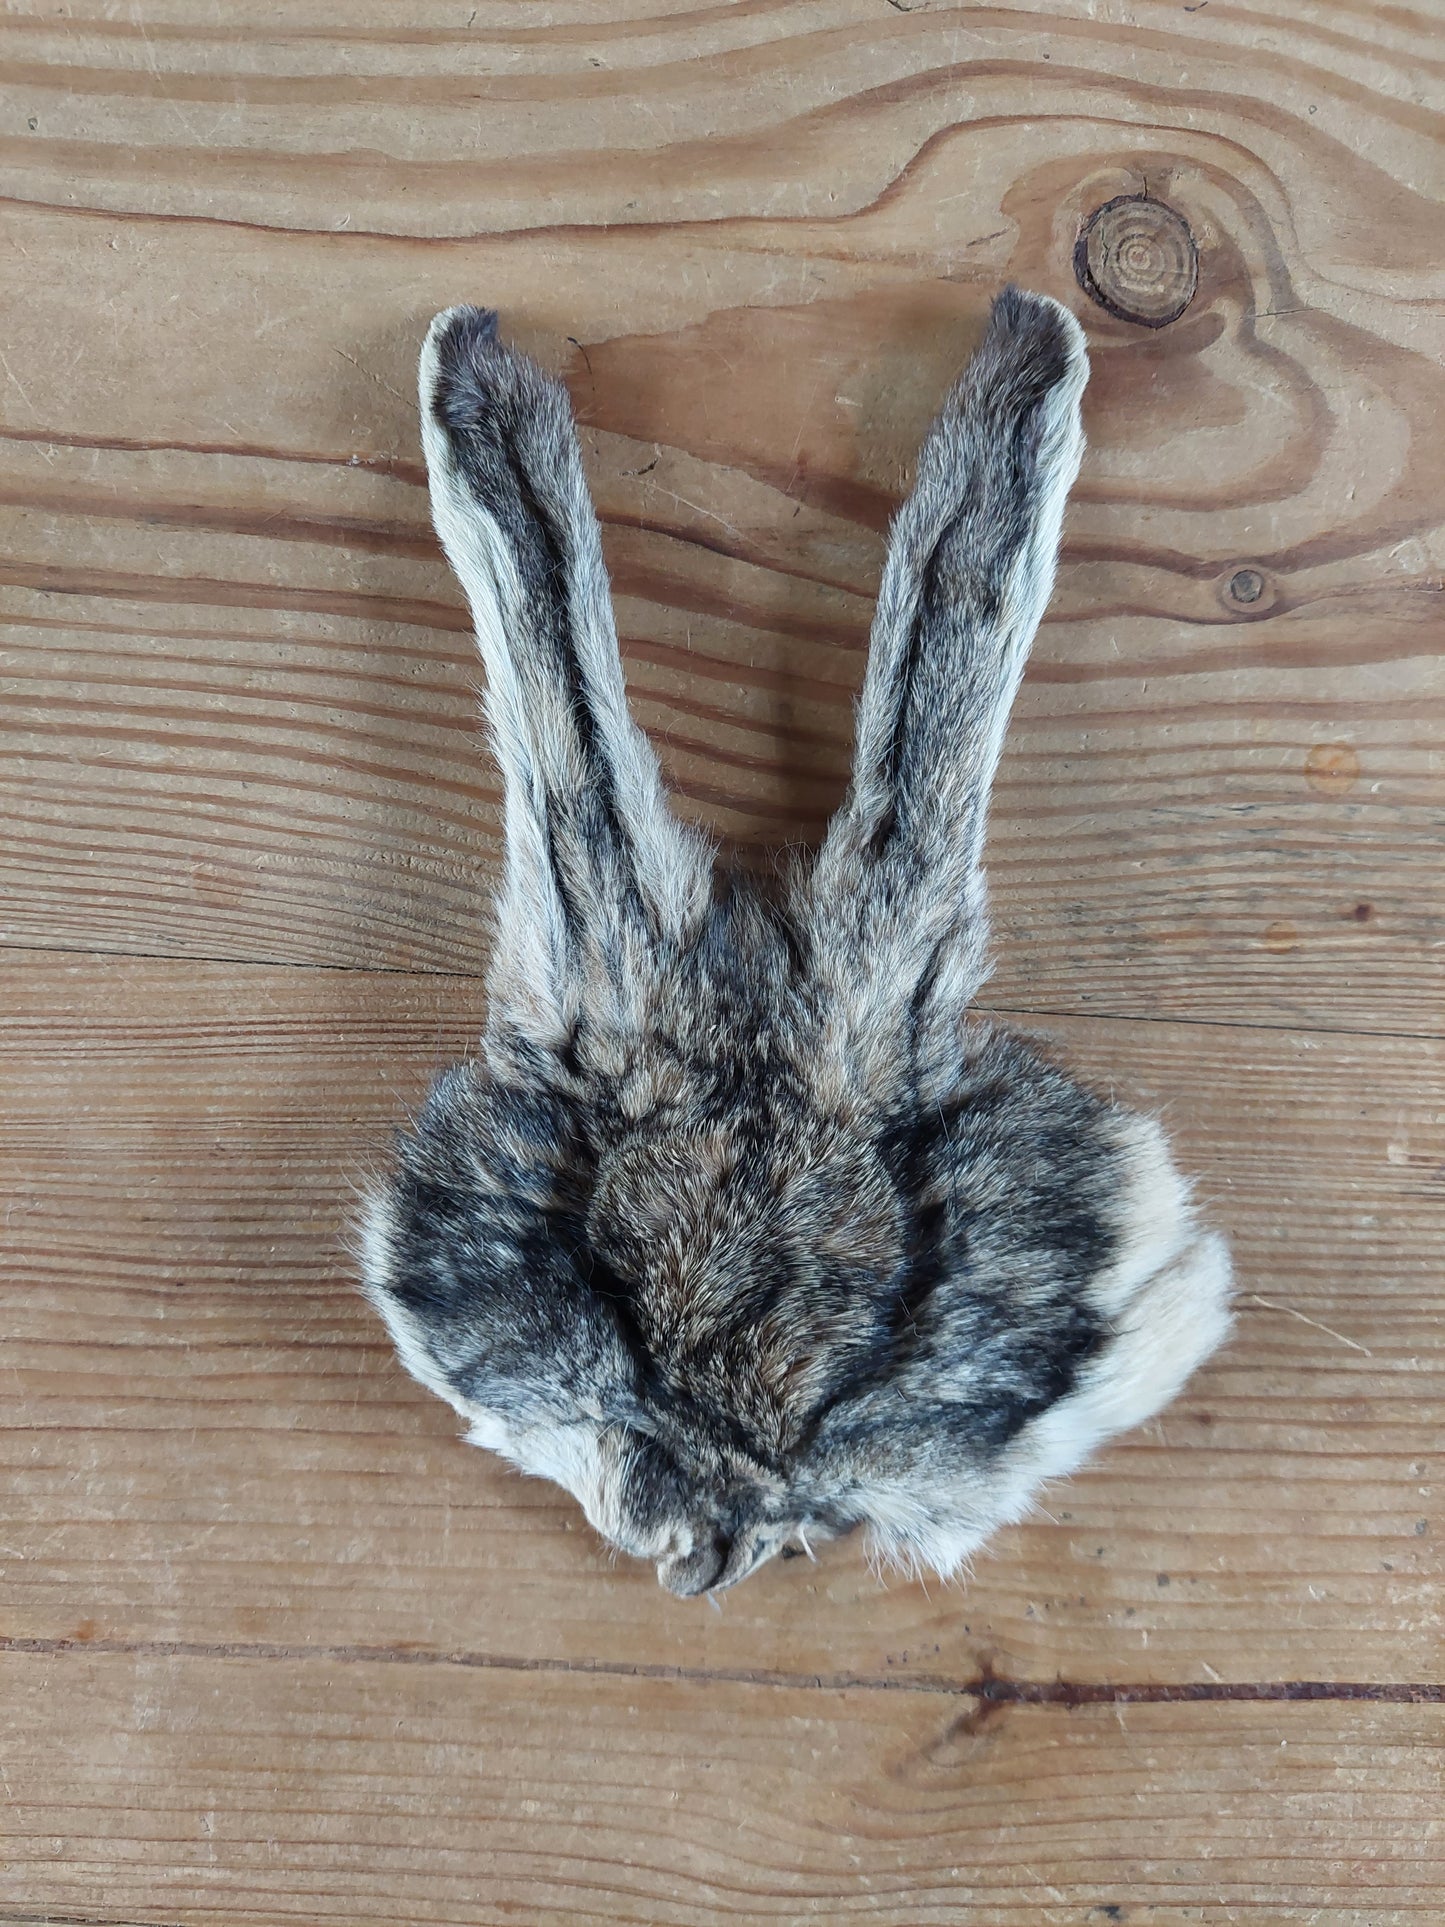 Hare head skins